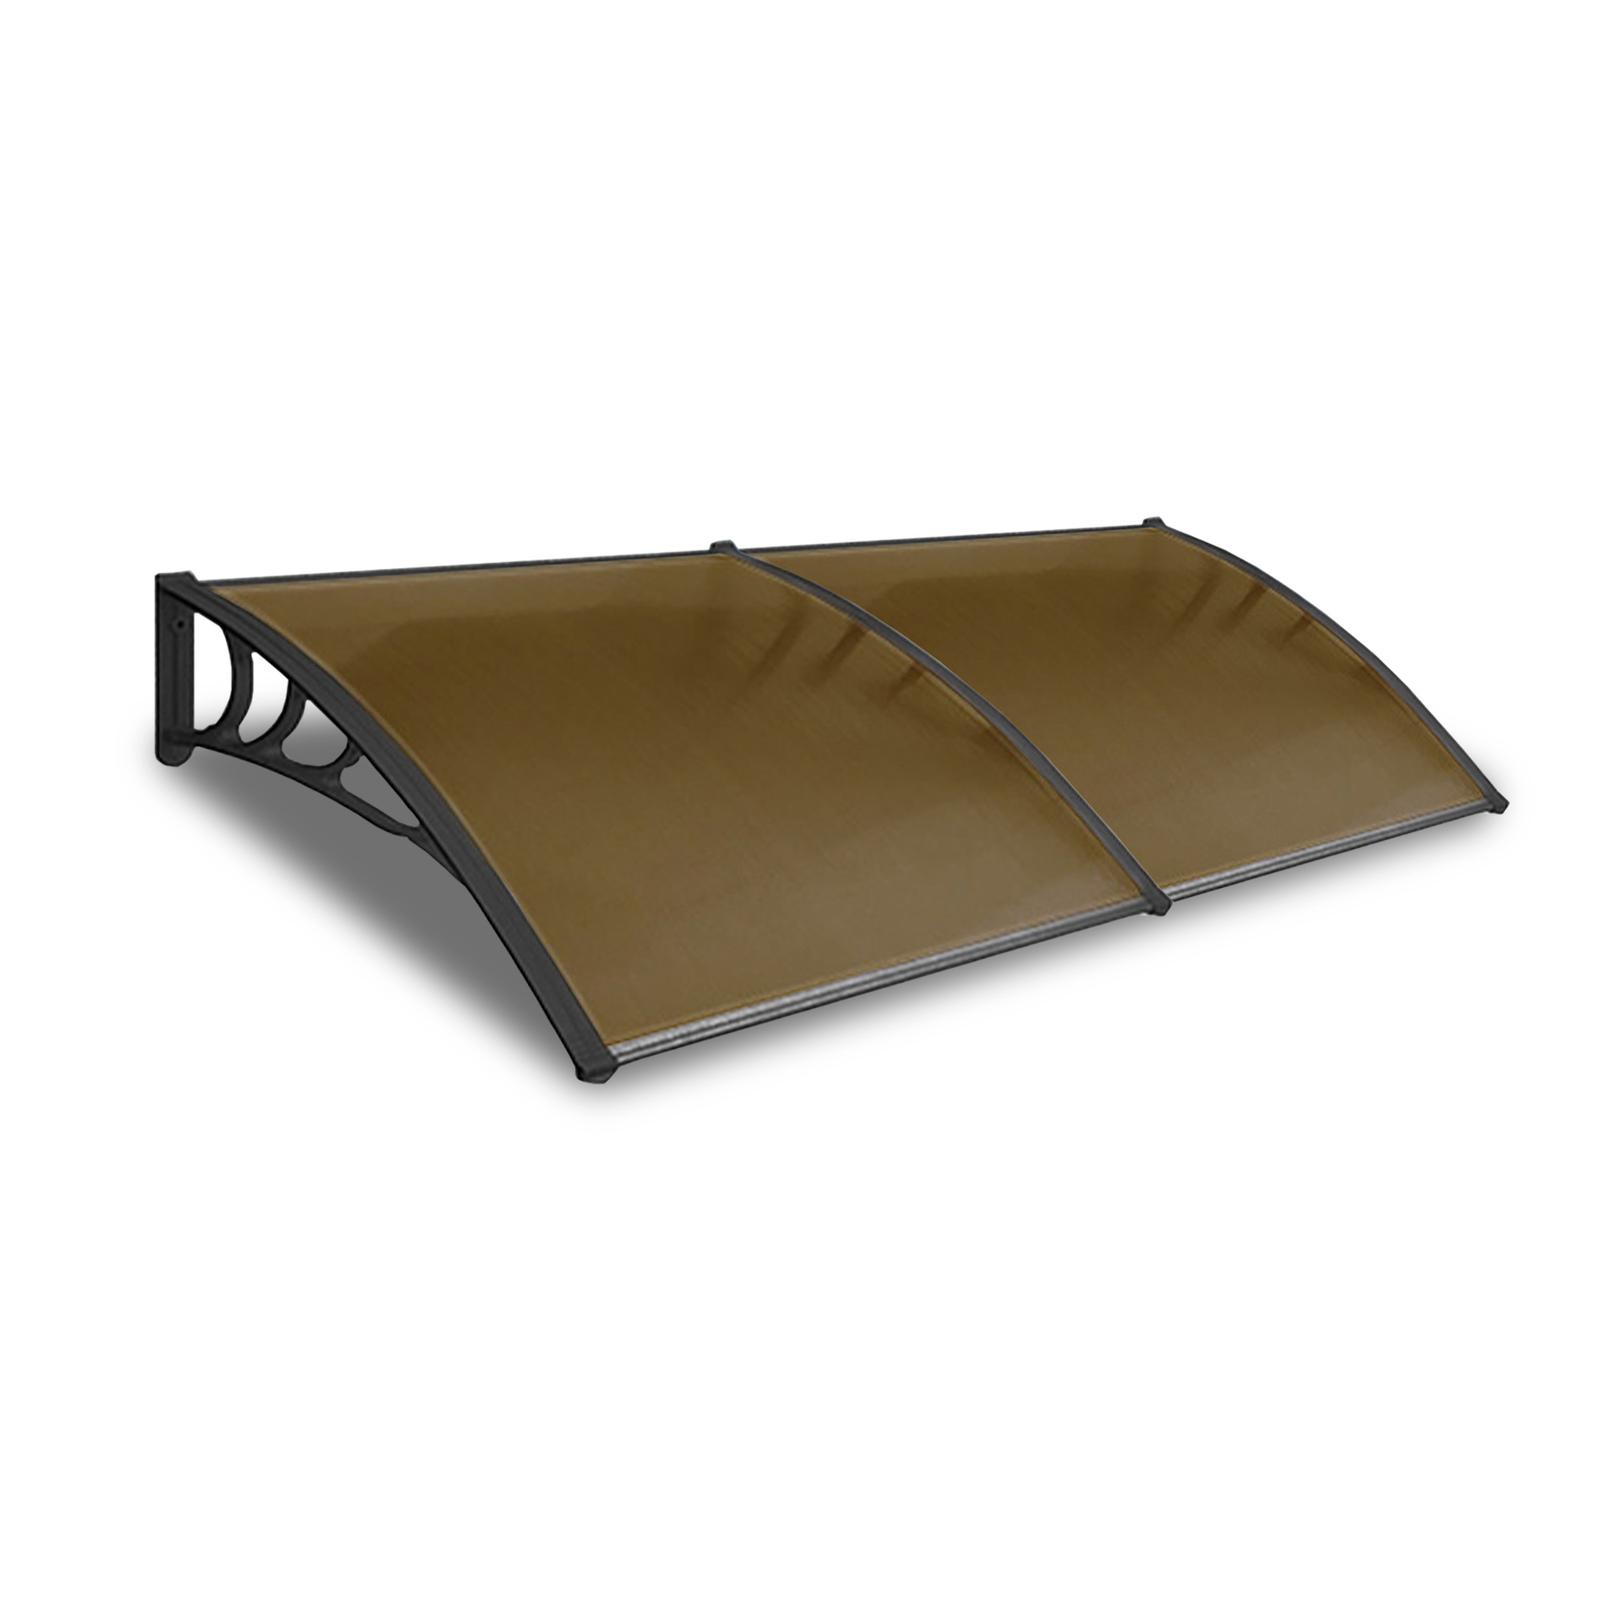 2.4 x 1M Window Door Awning Canopy Outdoor Patio UV Sun Shield Shade Waterproof Rain Cover - Brown Panel